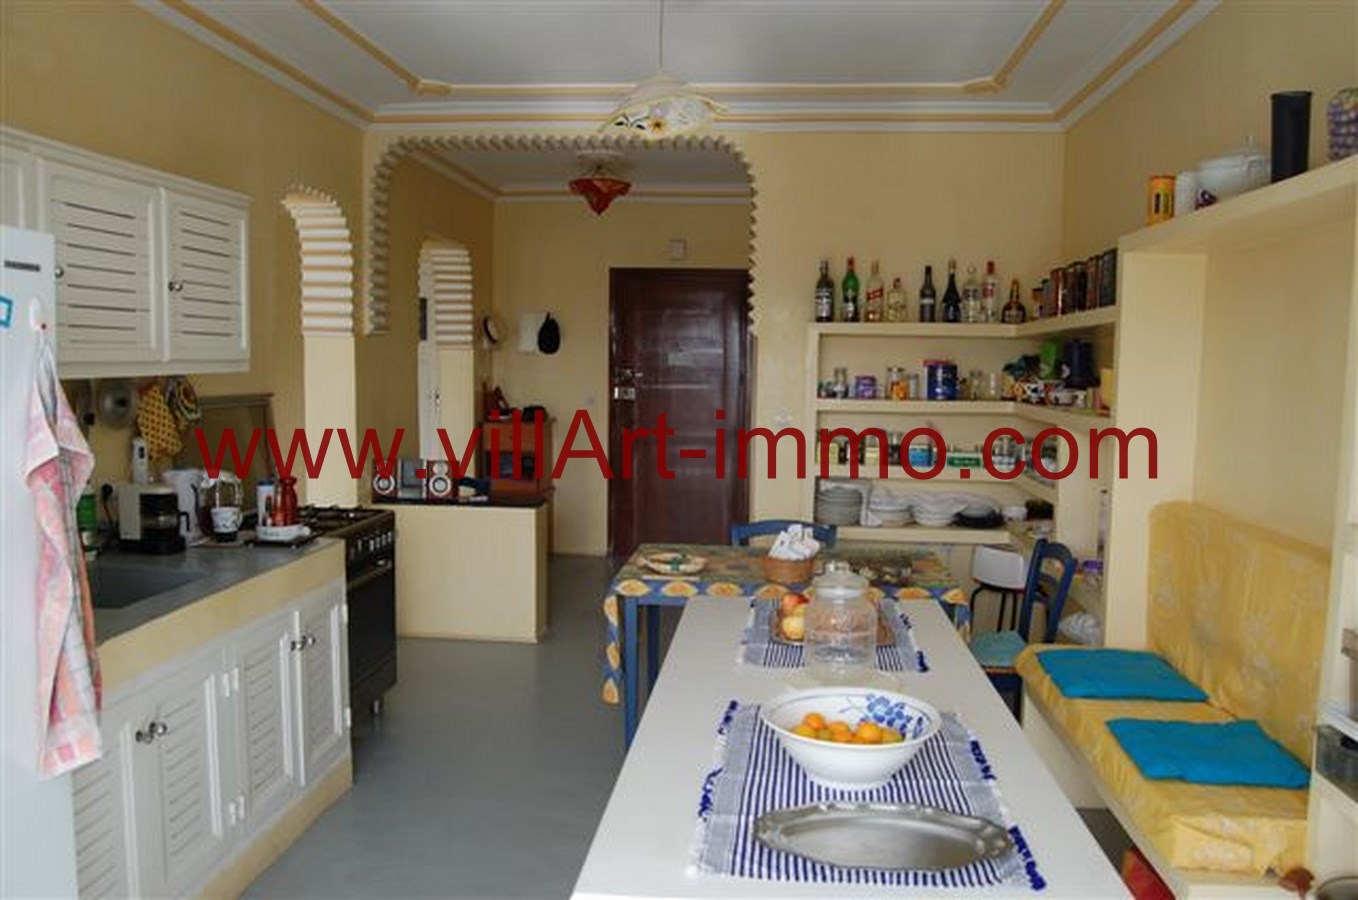 5-Location-Appartement-Meublé-Tanger-Cuisine-L730-Villart immo